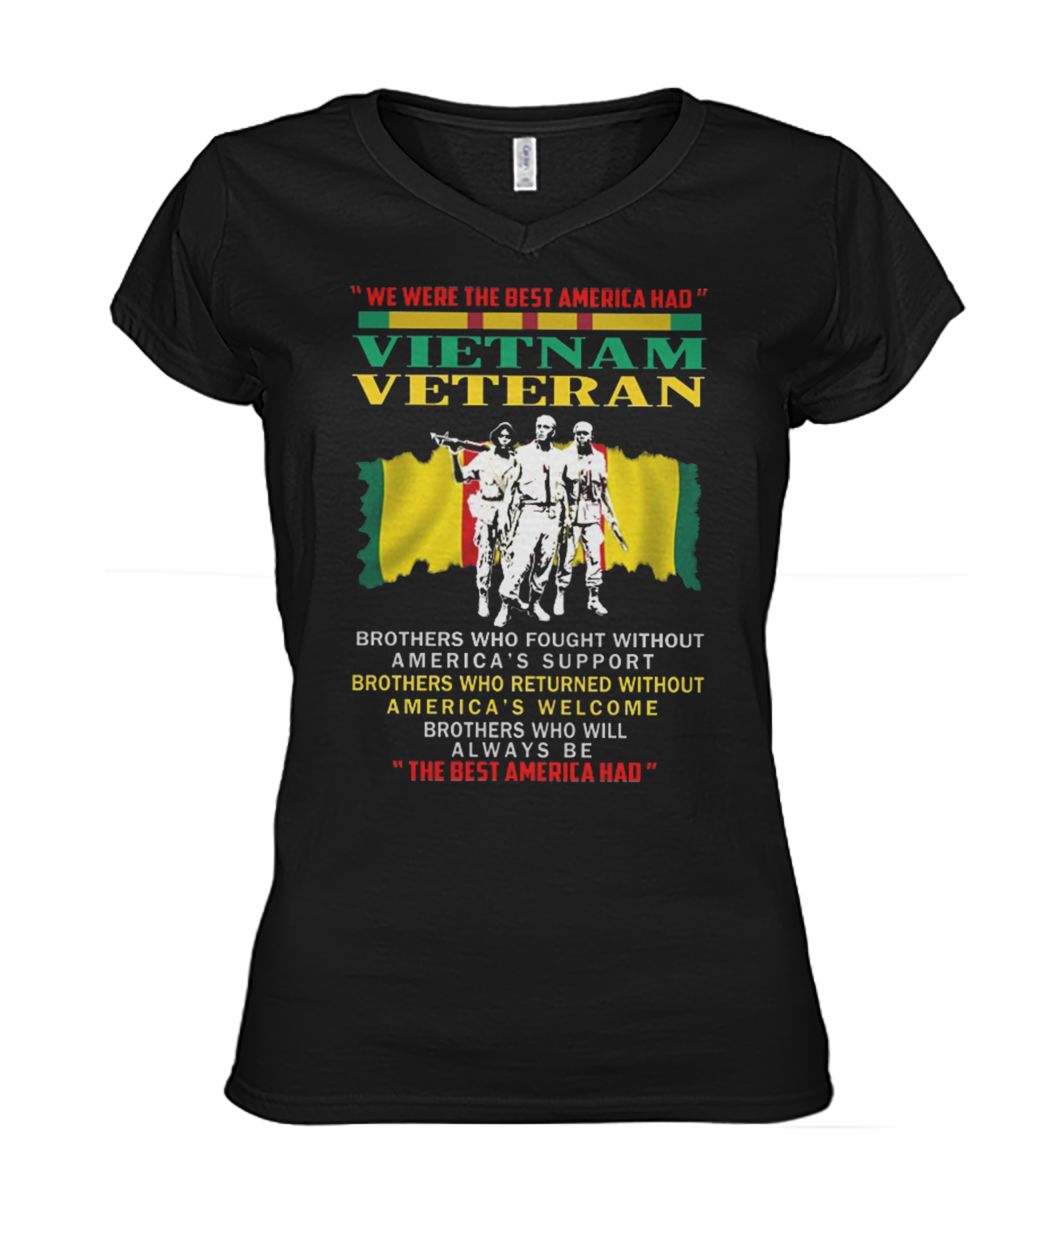 We were the best america had vietnam veteran women's v-neck